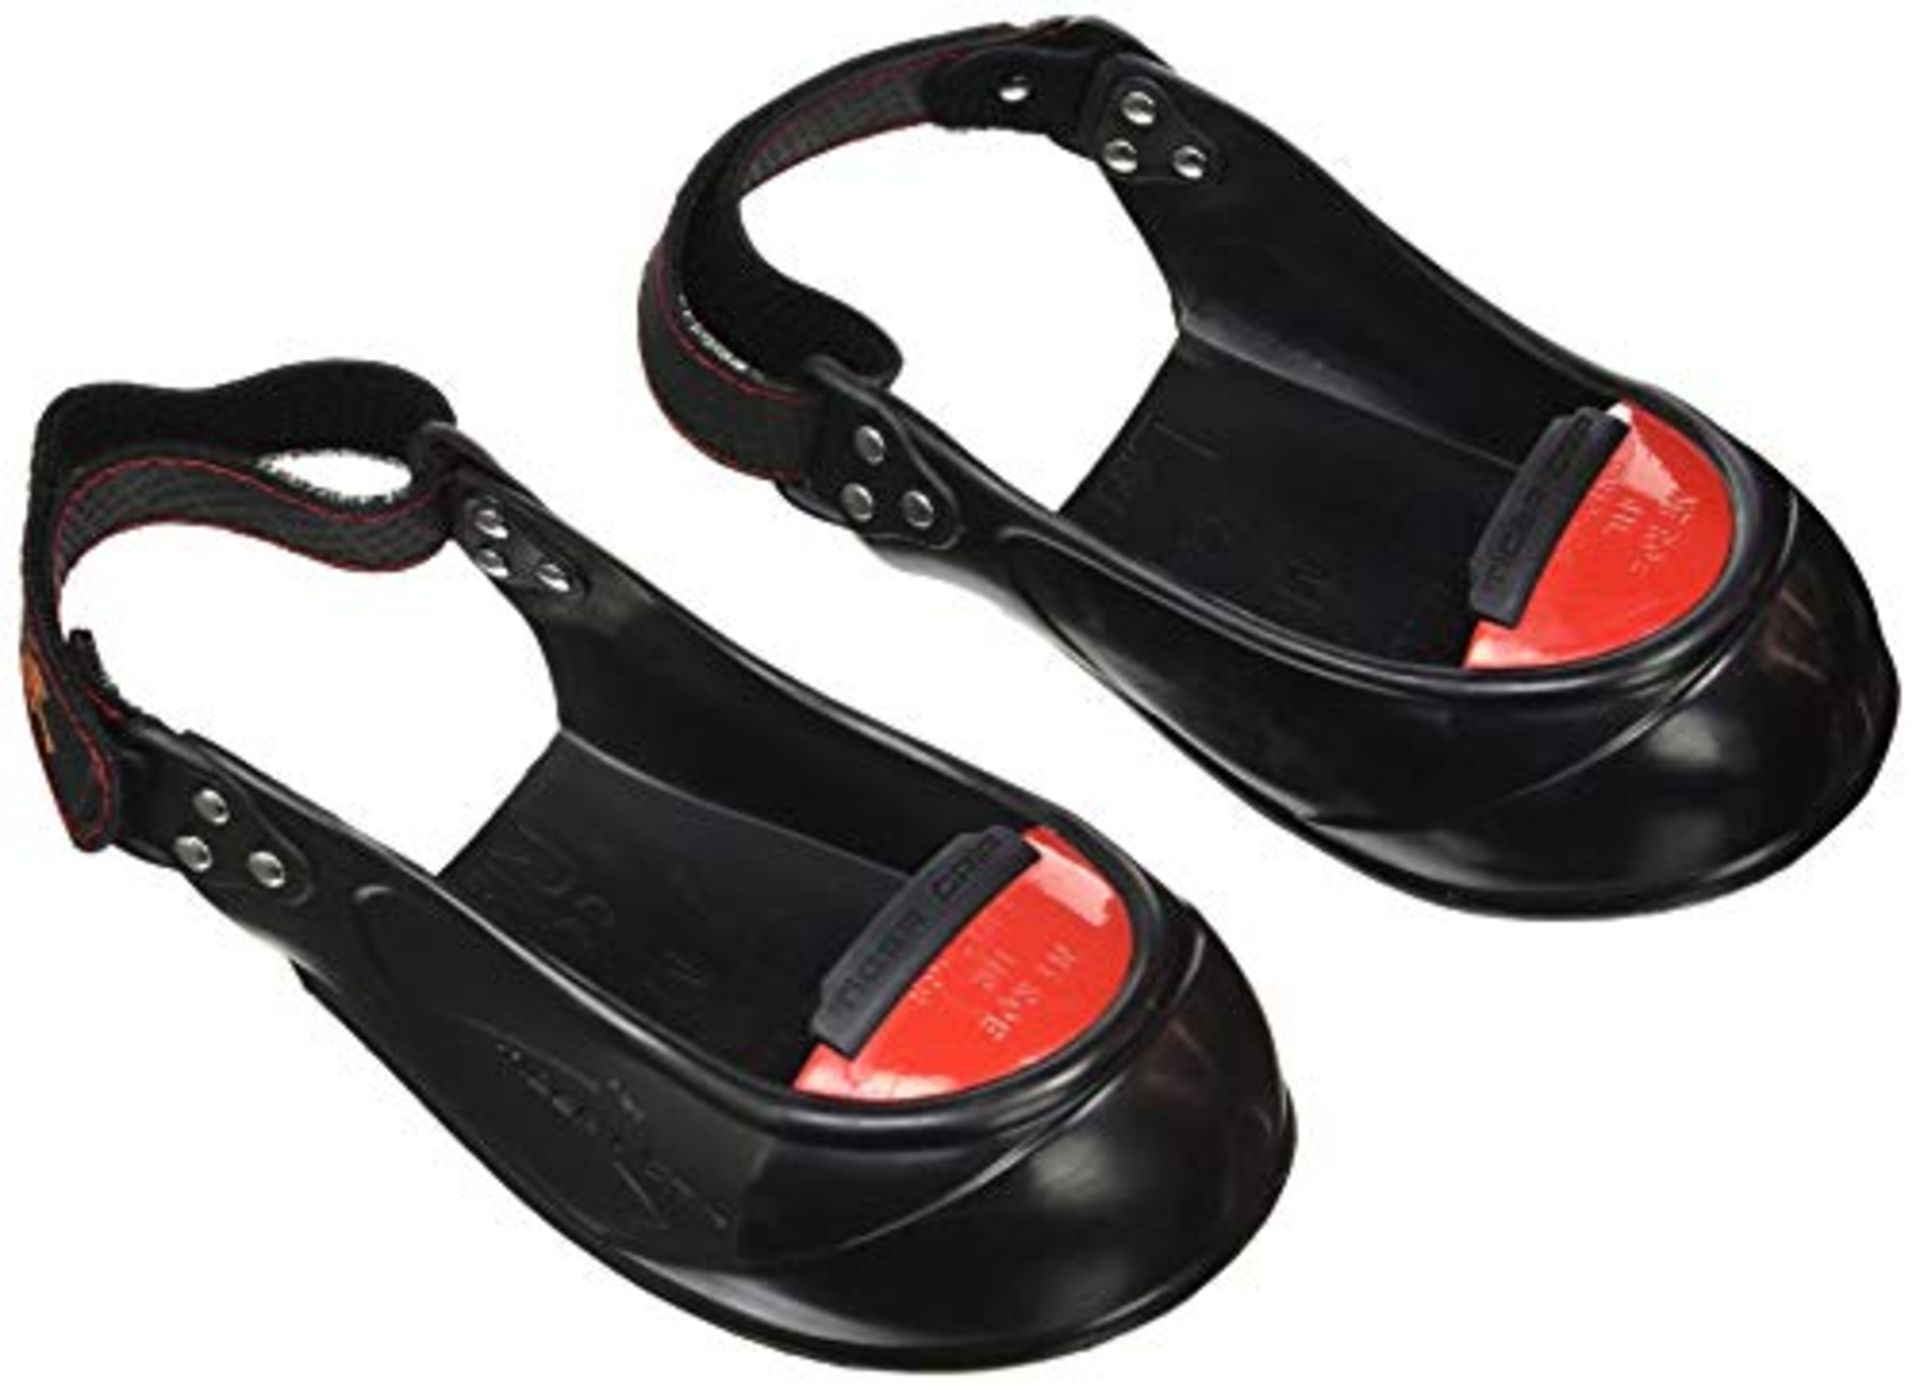 Tigergrip Safetycap Visitor Safety Toecap Overshoes Size Medium (Pair) - EN safety cer